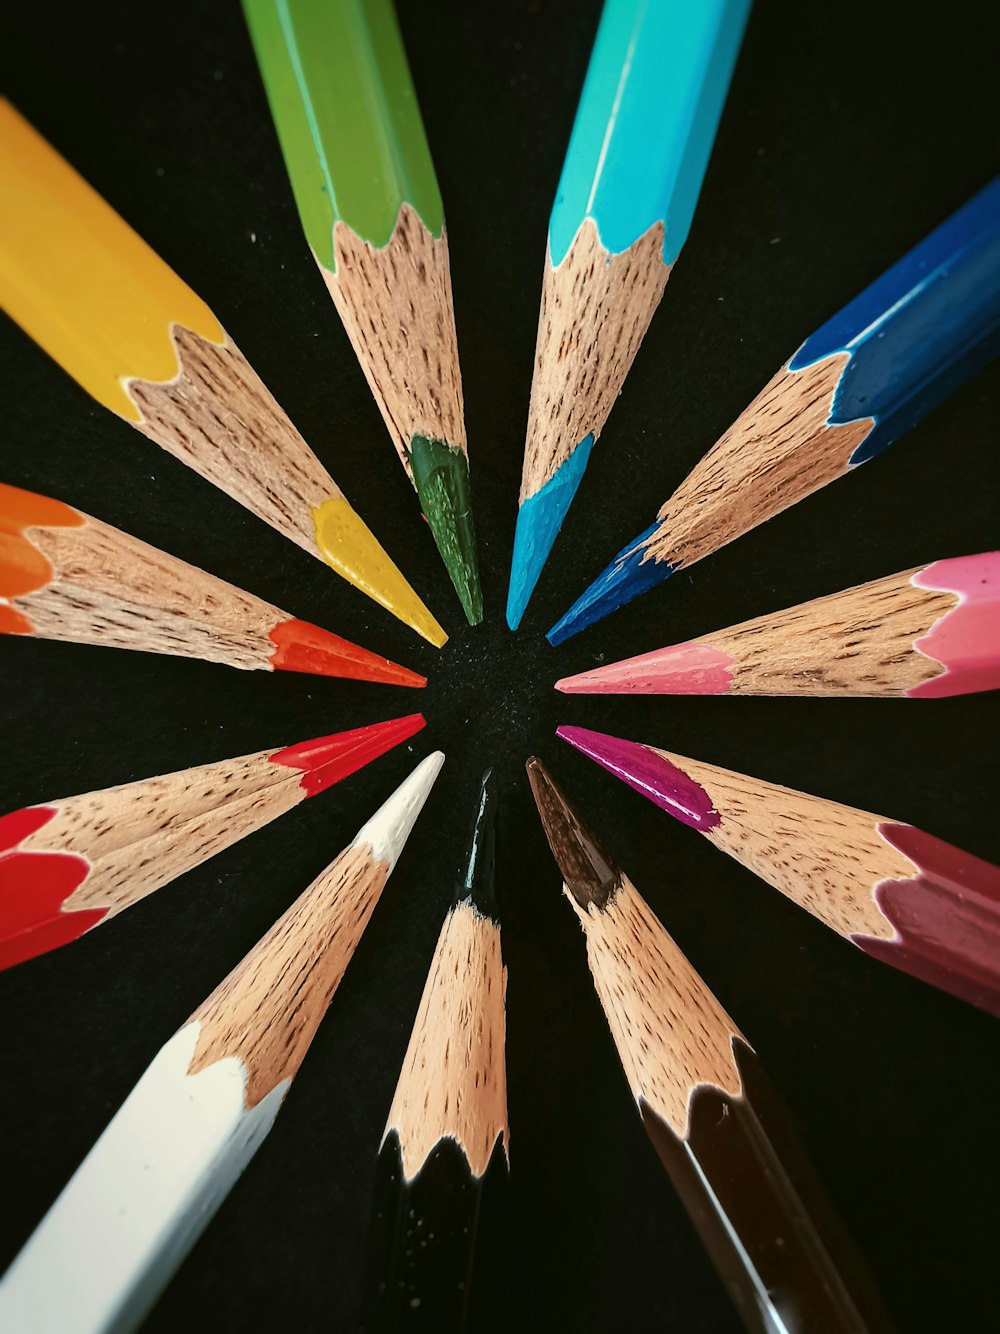 999+ Color Pencil Pictures  Download Free Images on Unsplash